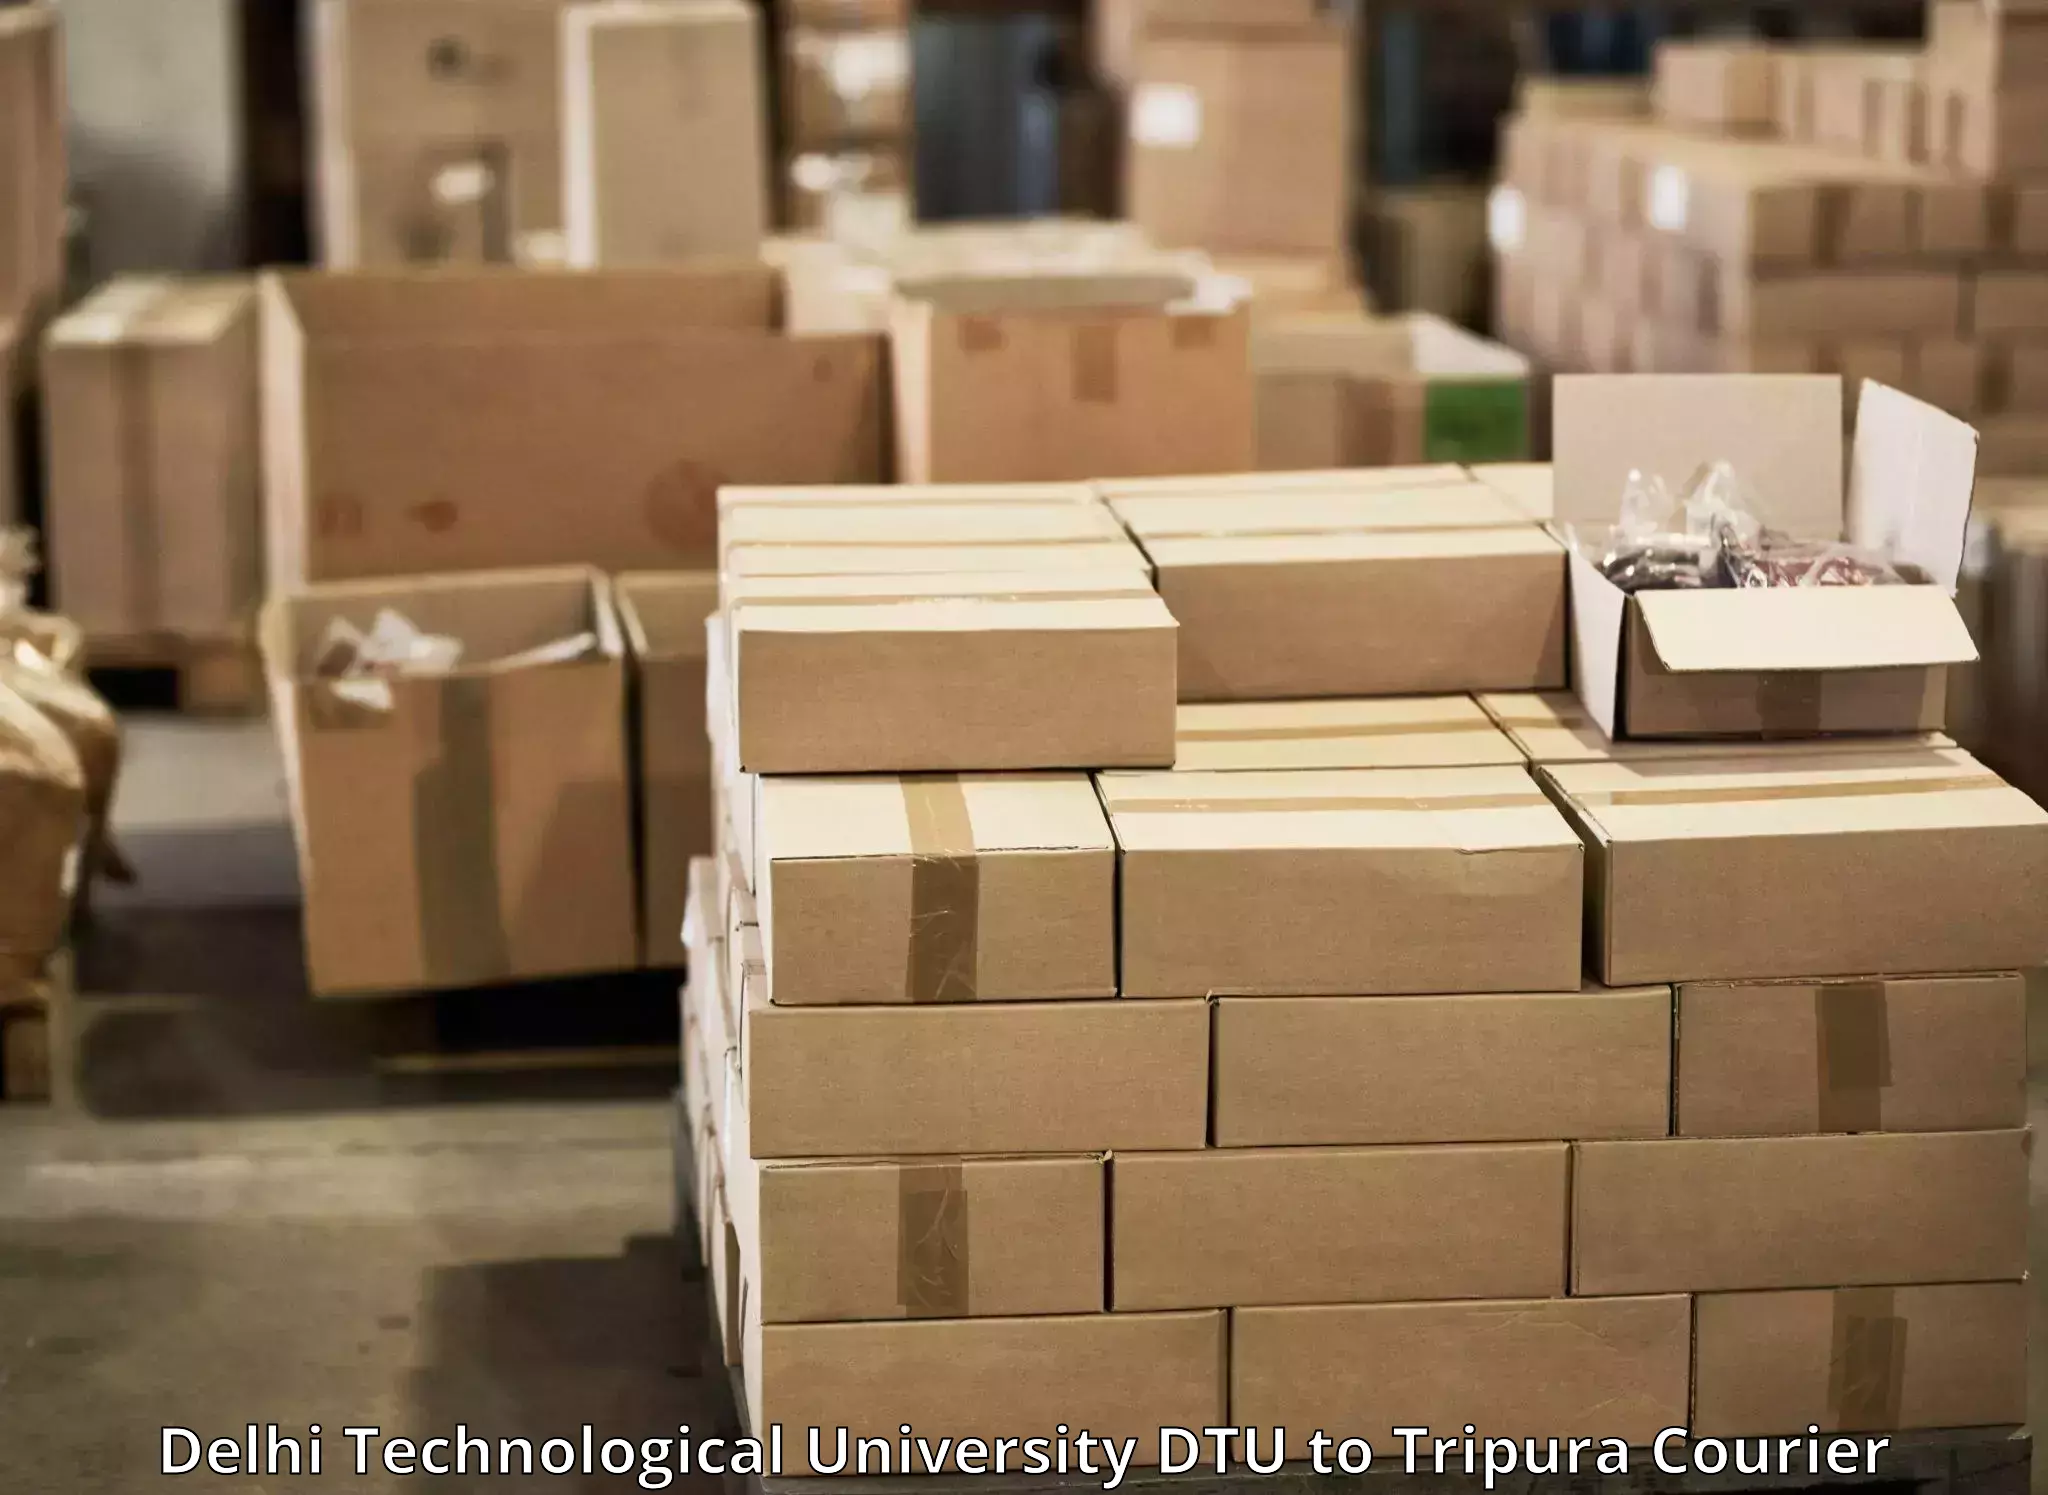 Cargo delivery service Delhi Technological University DTU to Udaipur Tripura